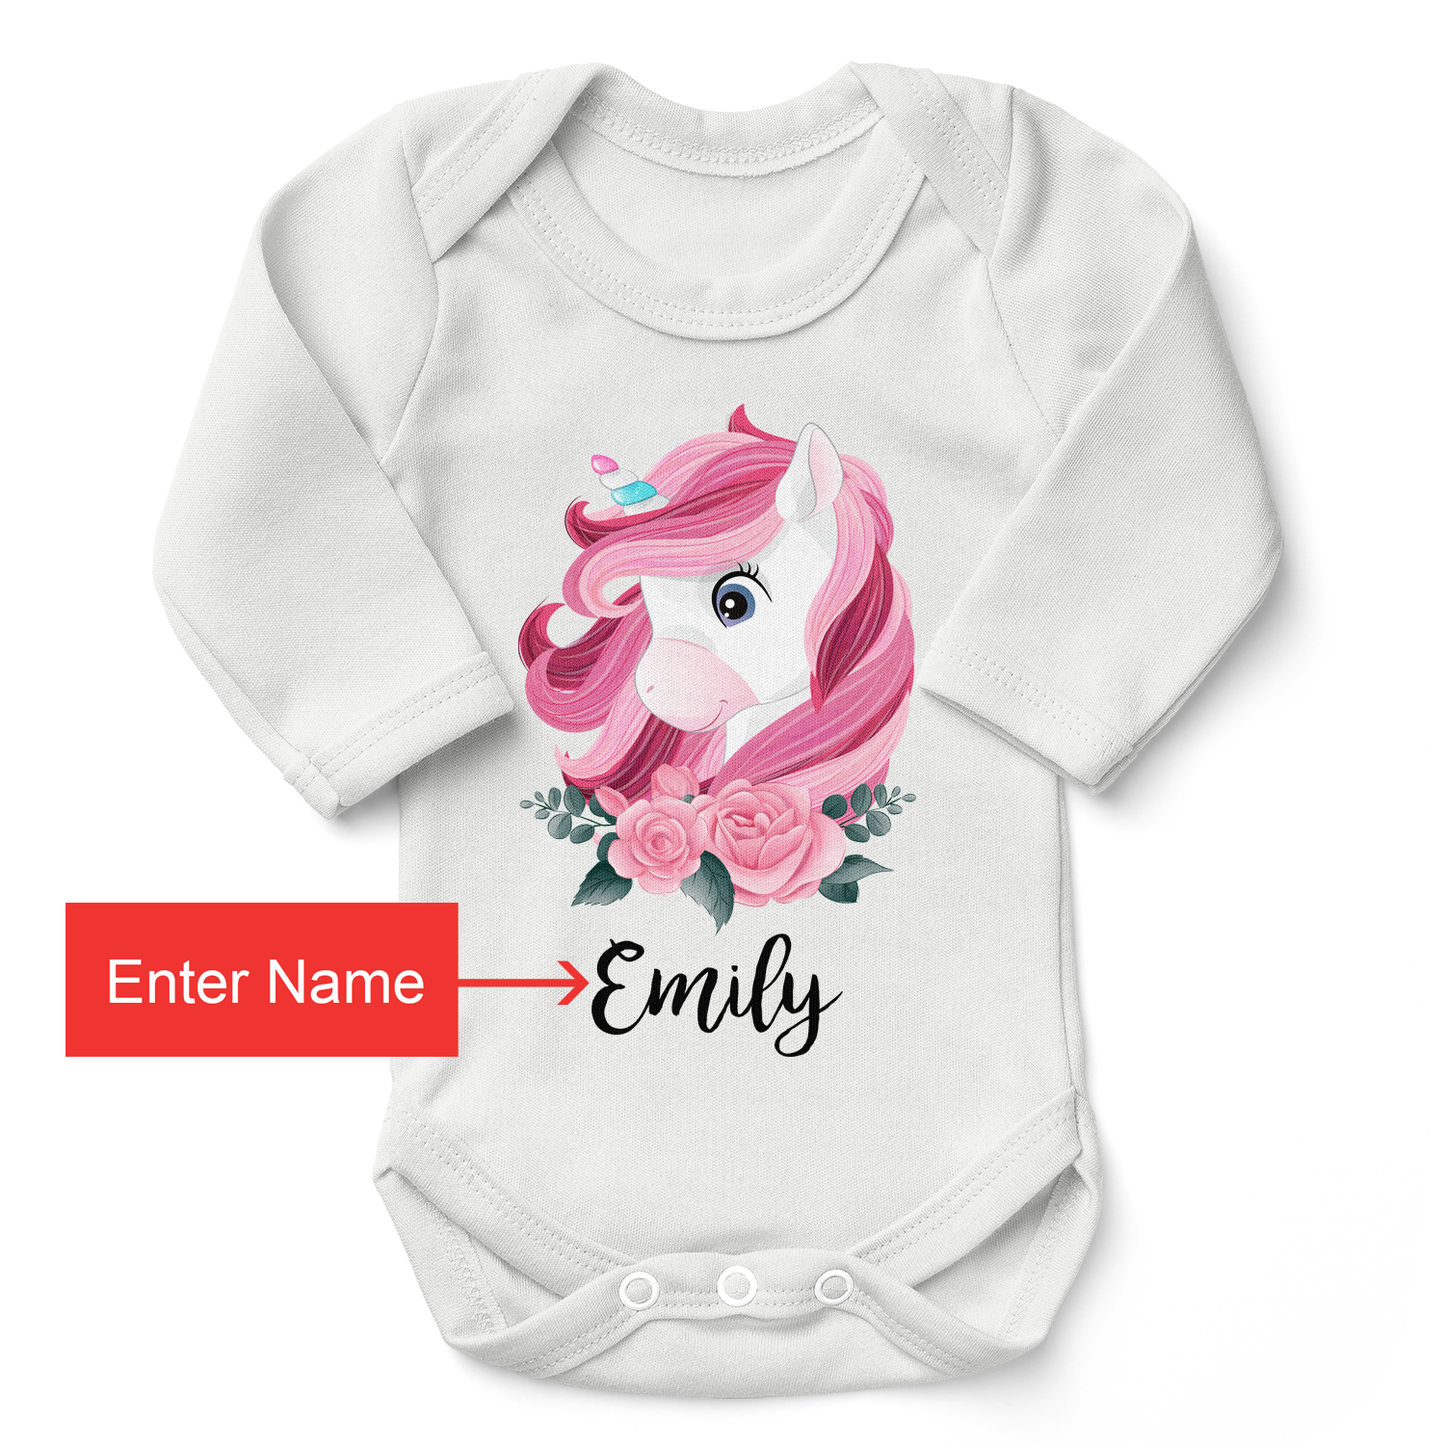 Personalized Matching Mom & Baby Organic Outfits - Unicorn Family (White)